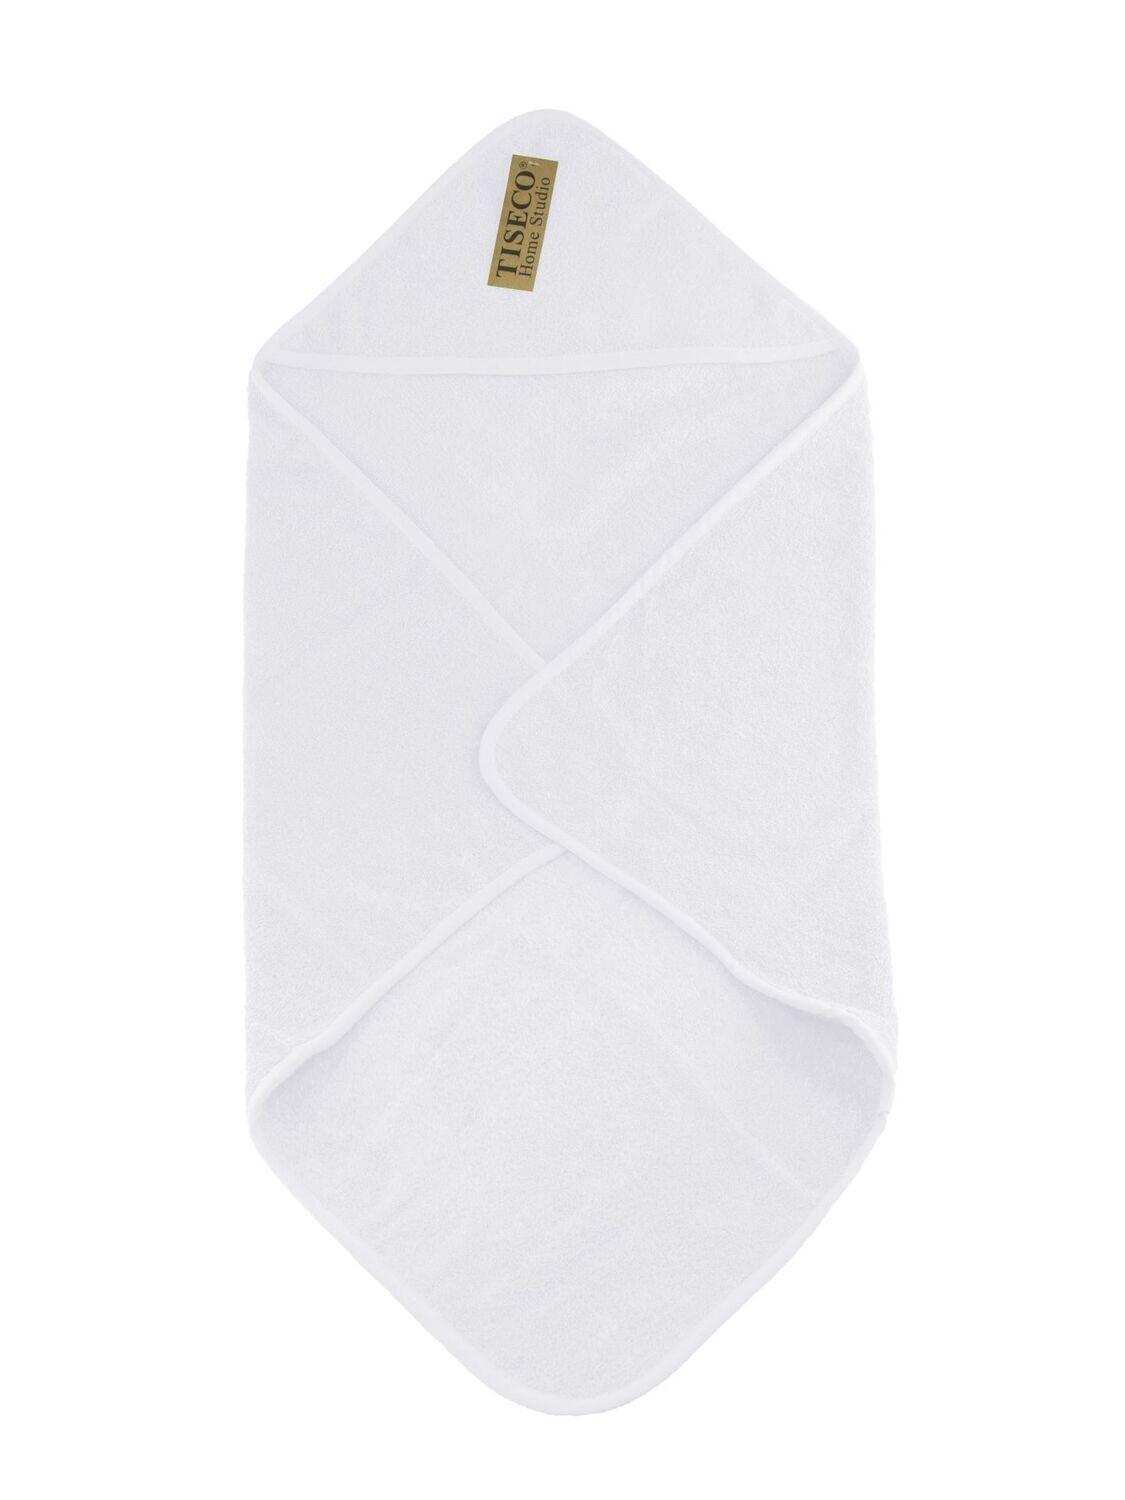 Asciugamano Bambino 75x75 cm Bianco - Tirolix